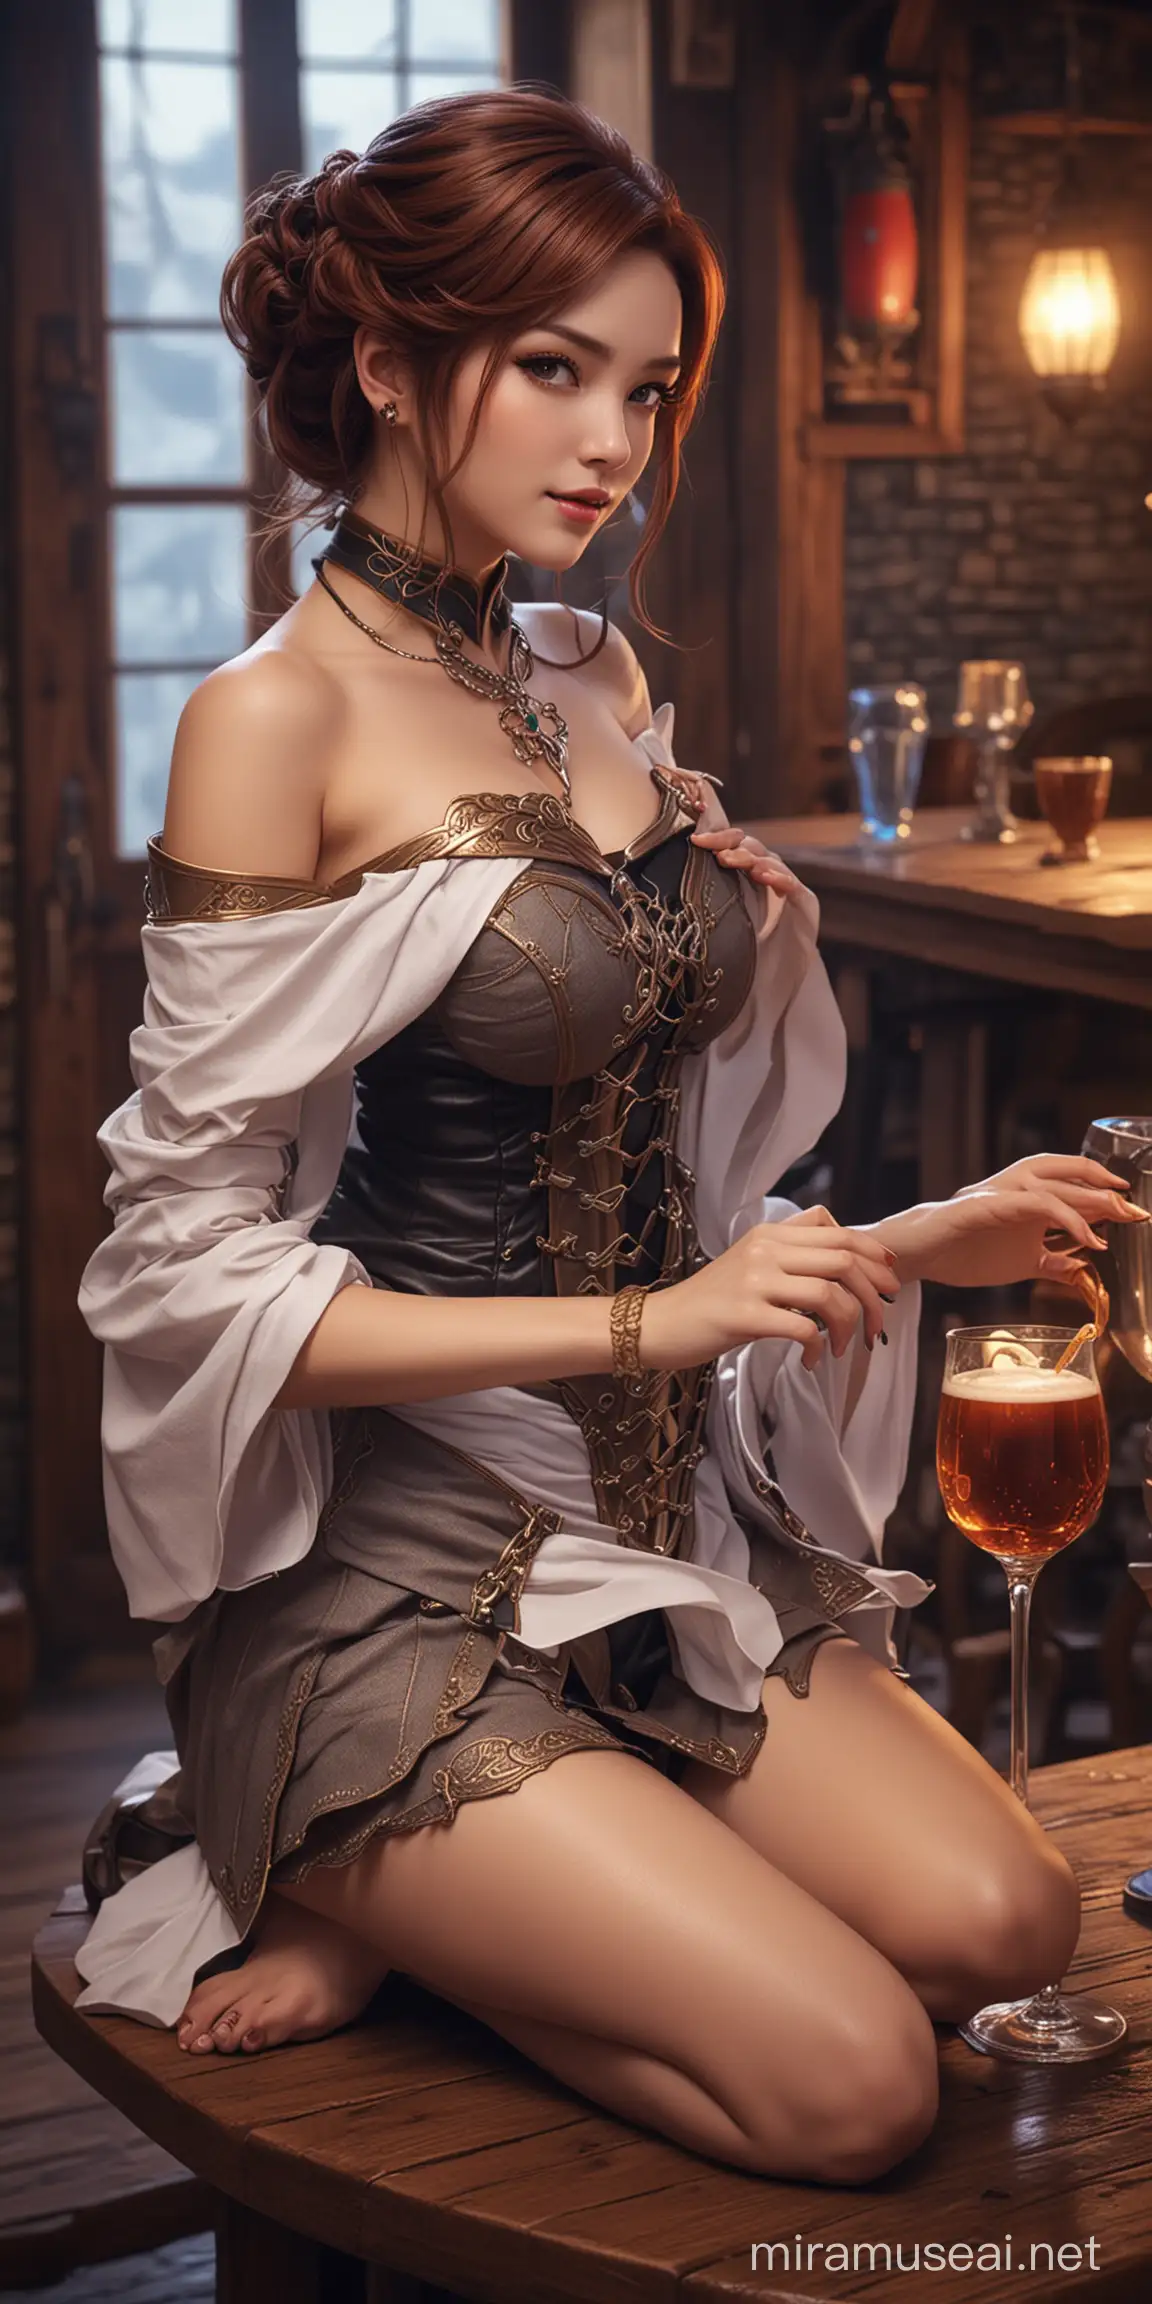 Elegant Oracle Idol Girl in Fantasy Tavern Setting